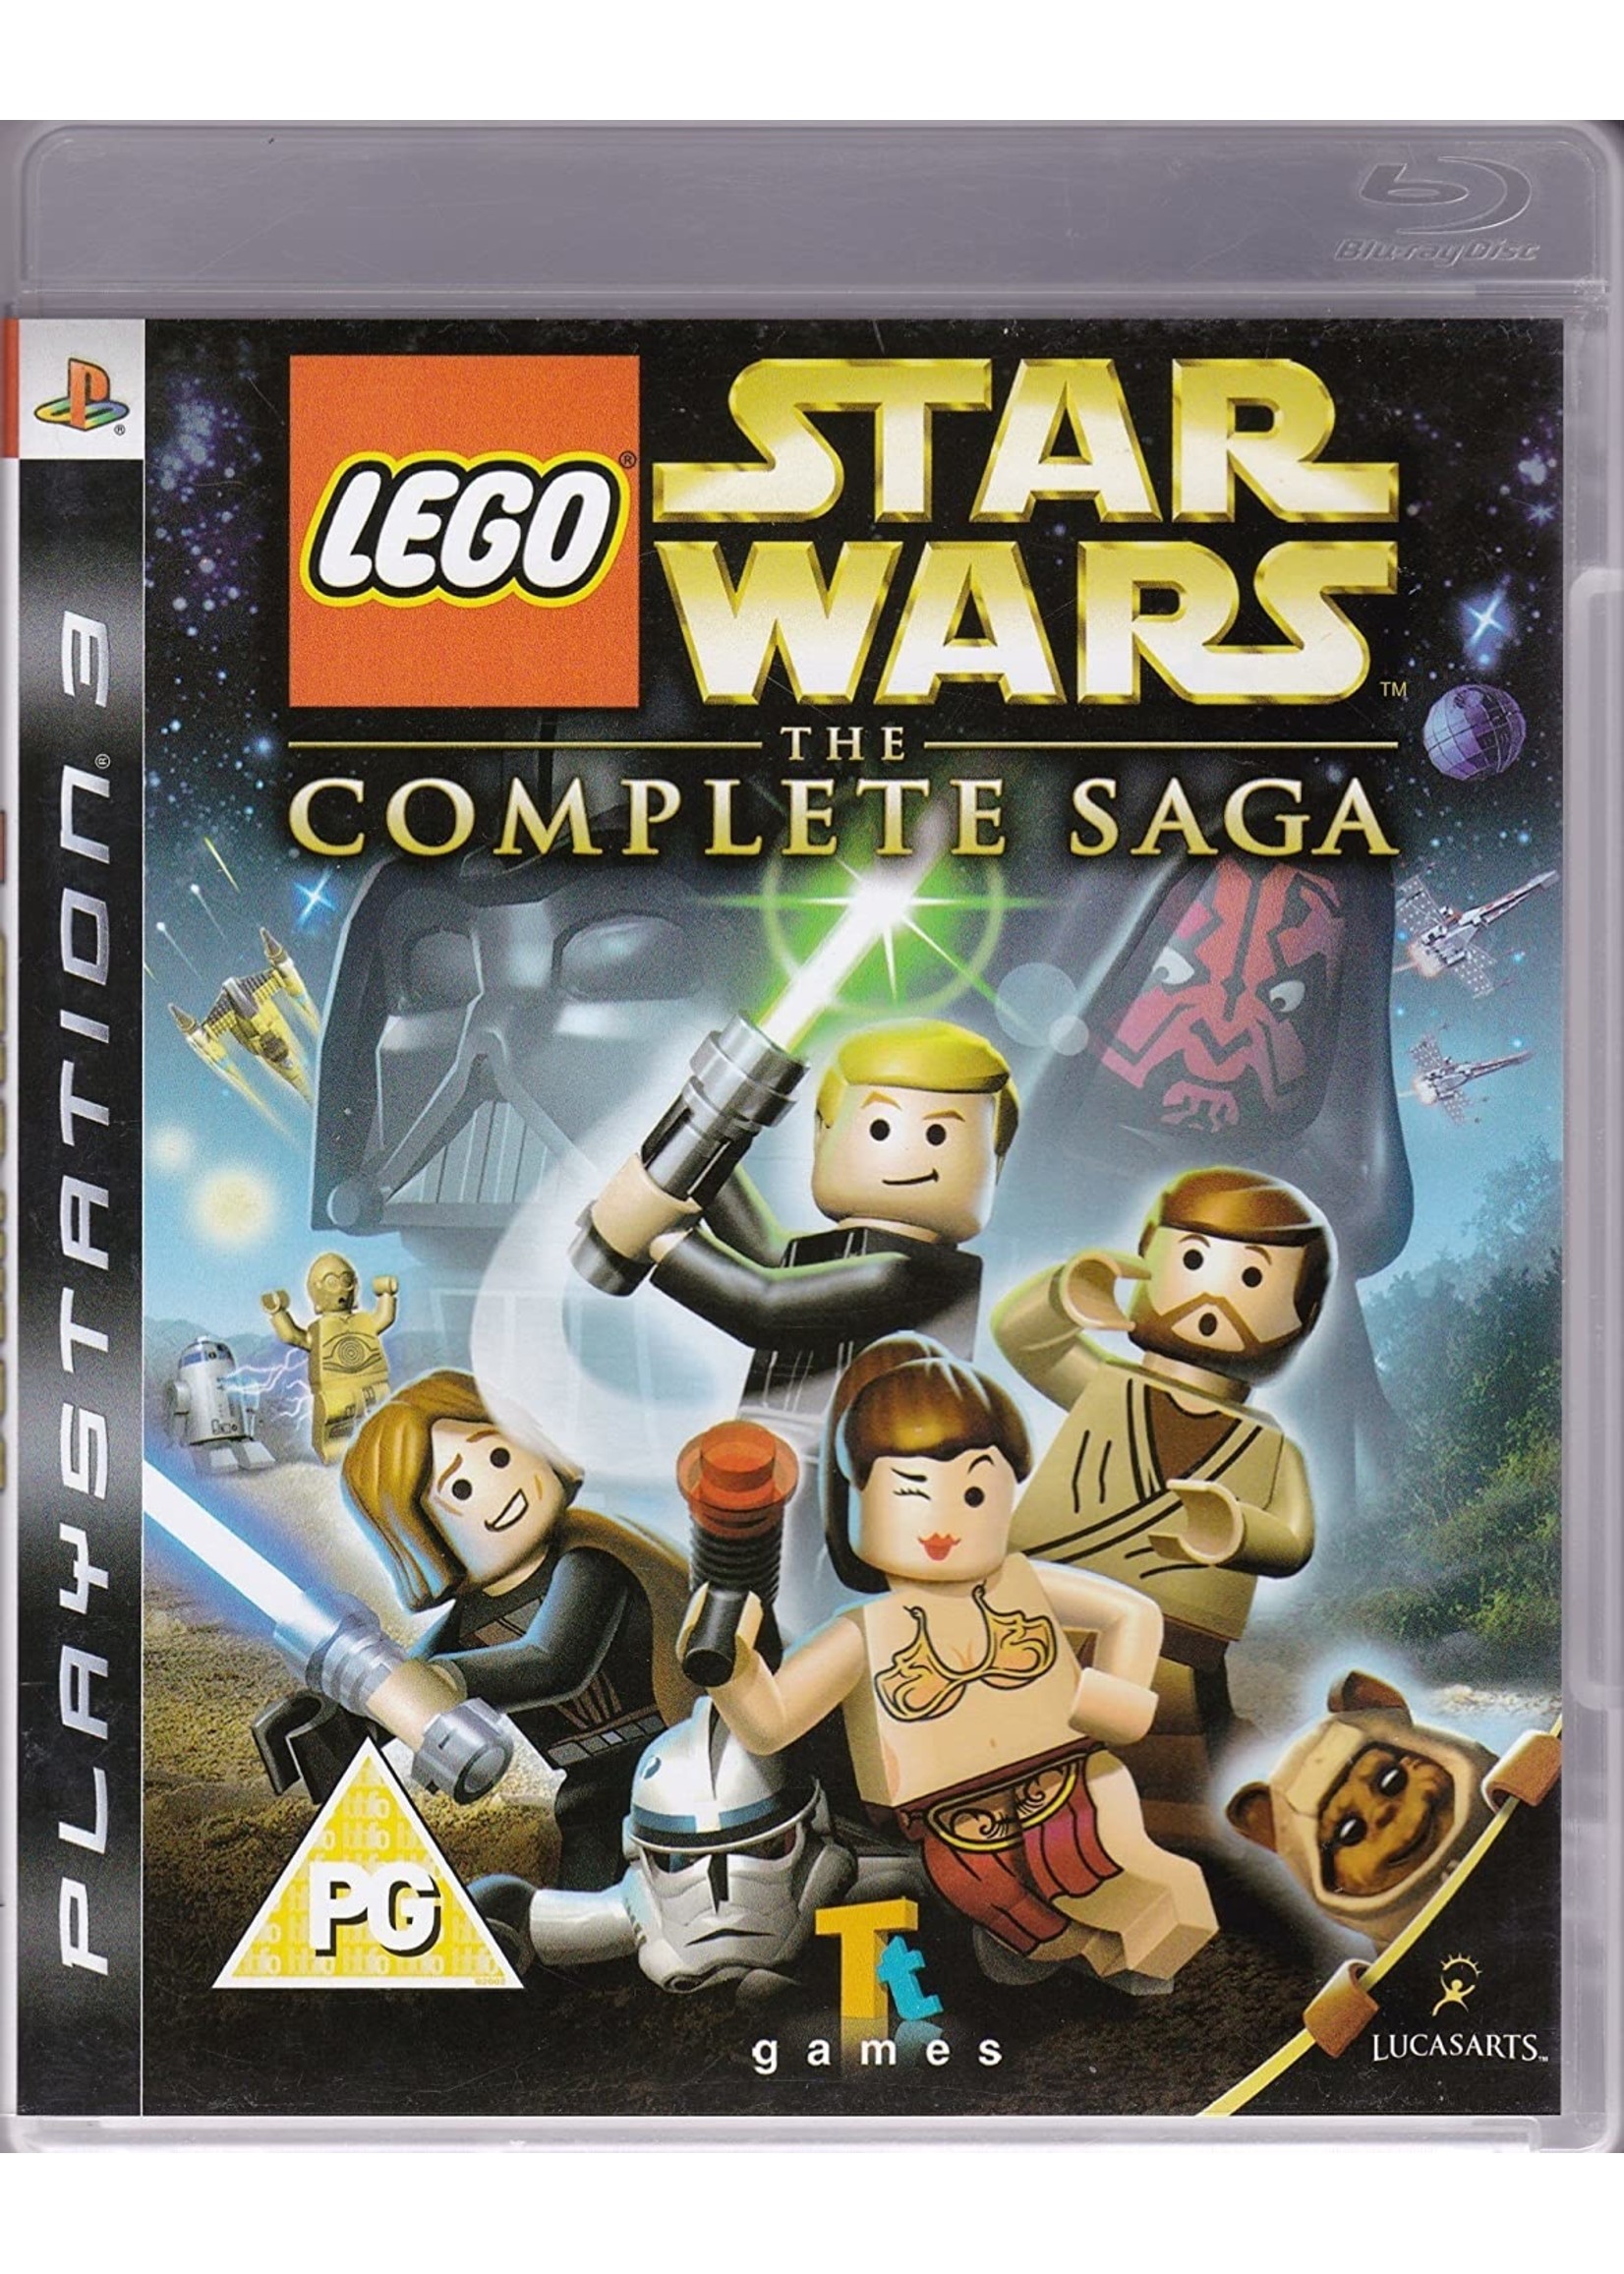 Sony Playstation 3 (PS3) LEGO Star Wars Complete Saga